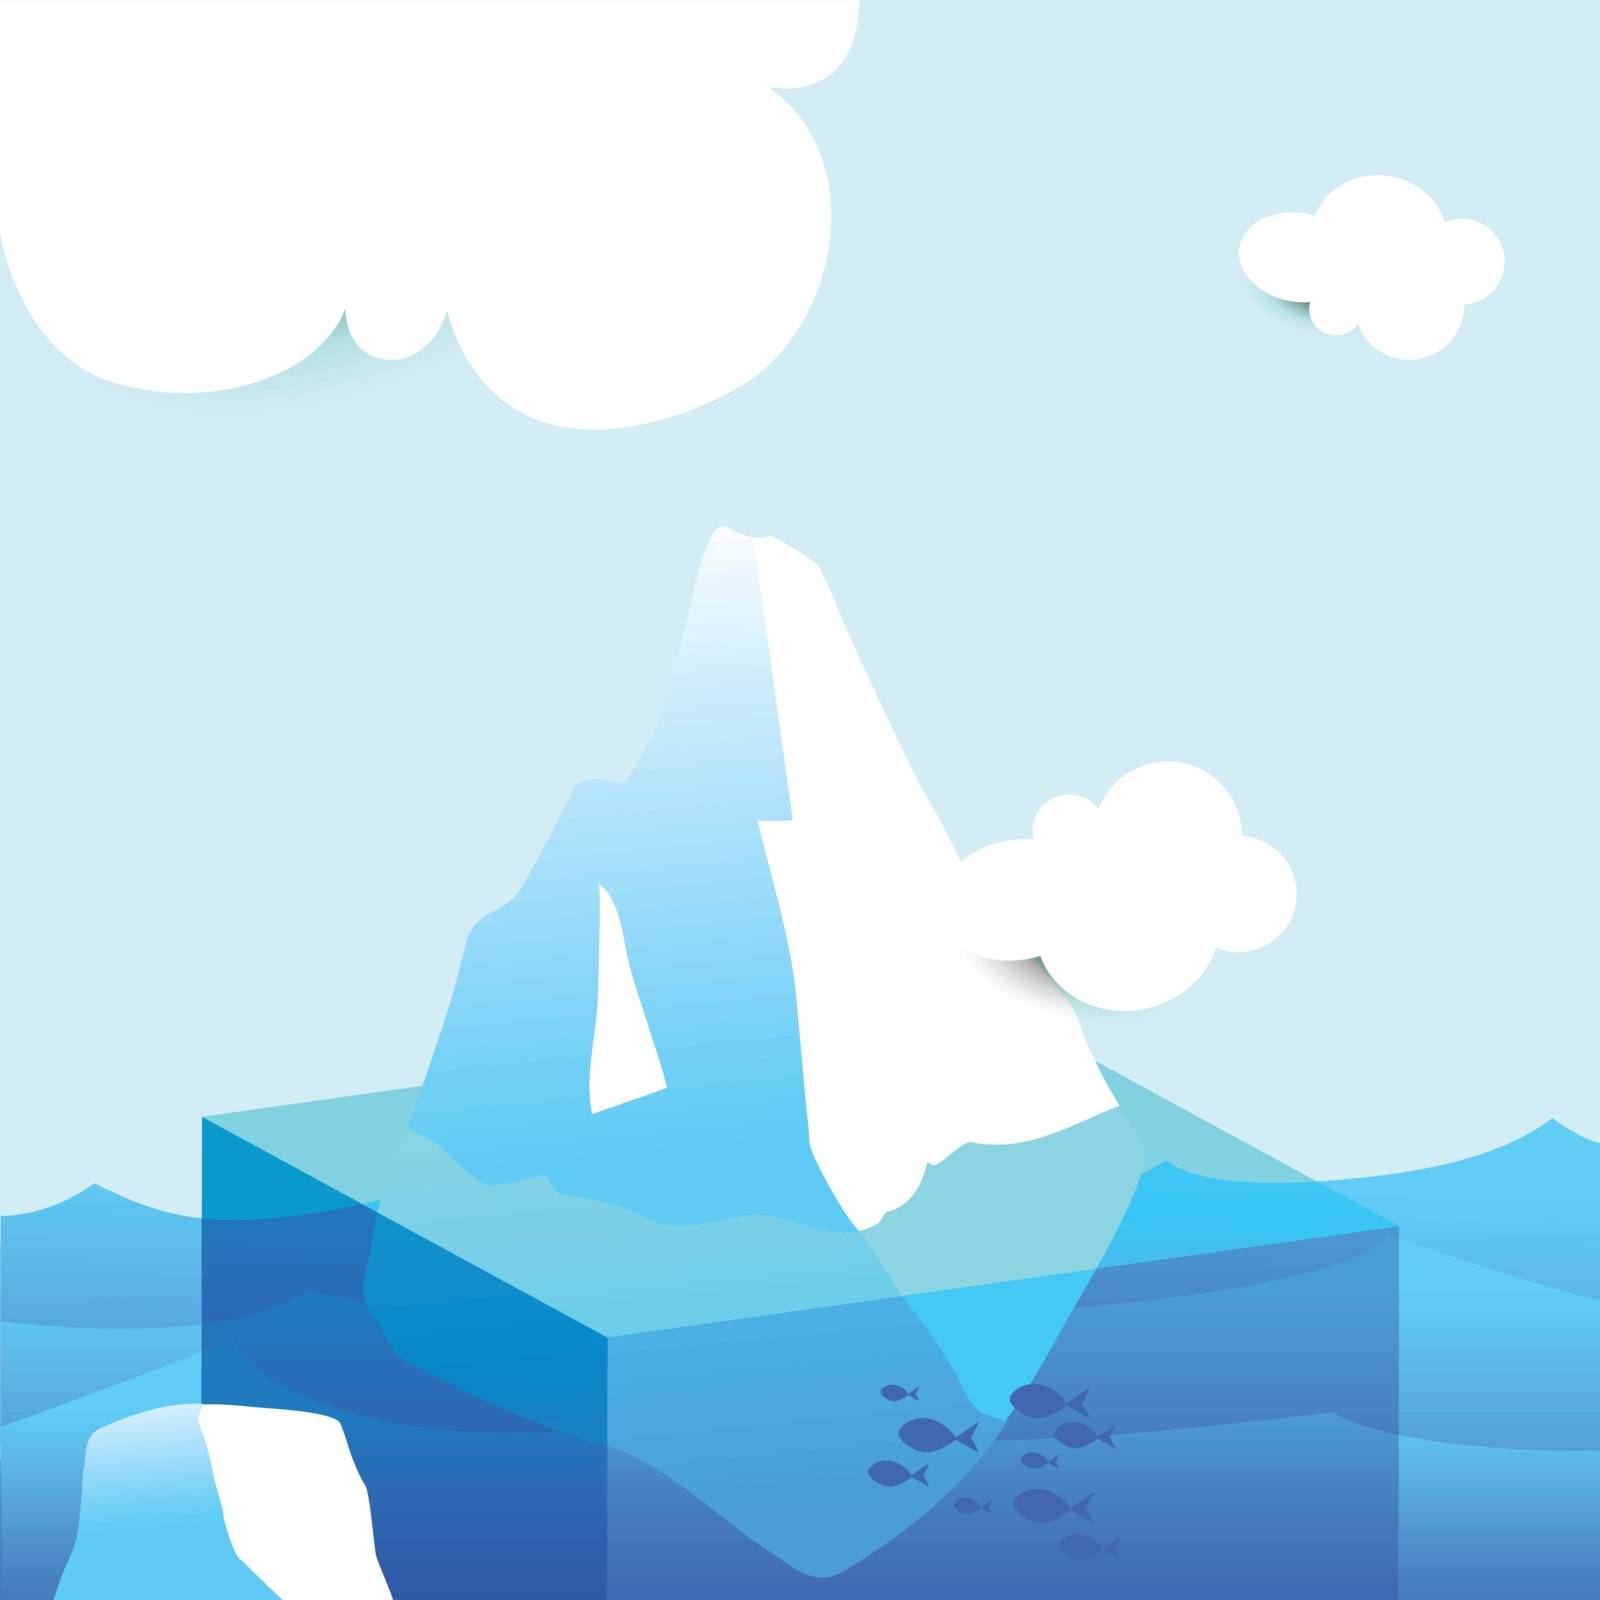 Iceberg in water, arctic landscape, ocean environment vector illustration.